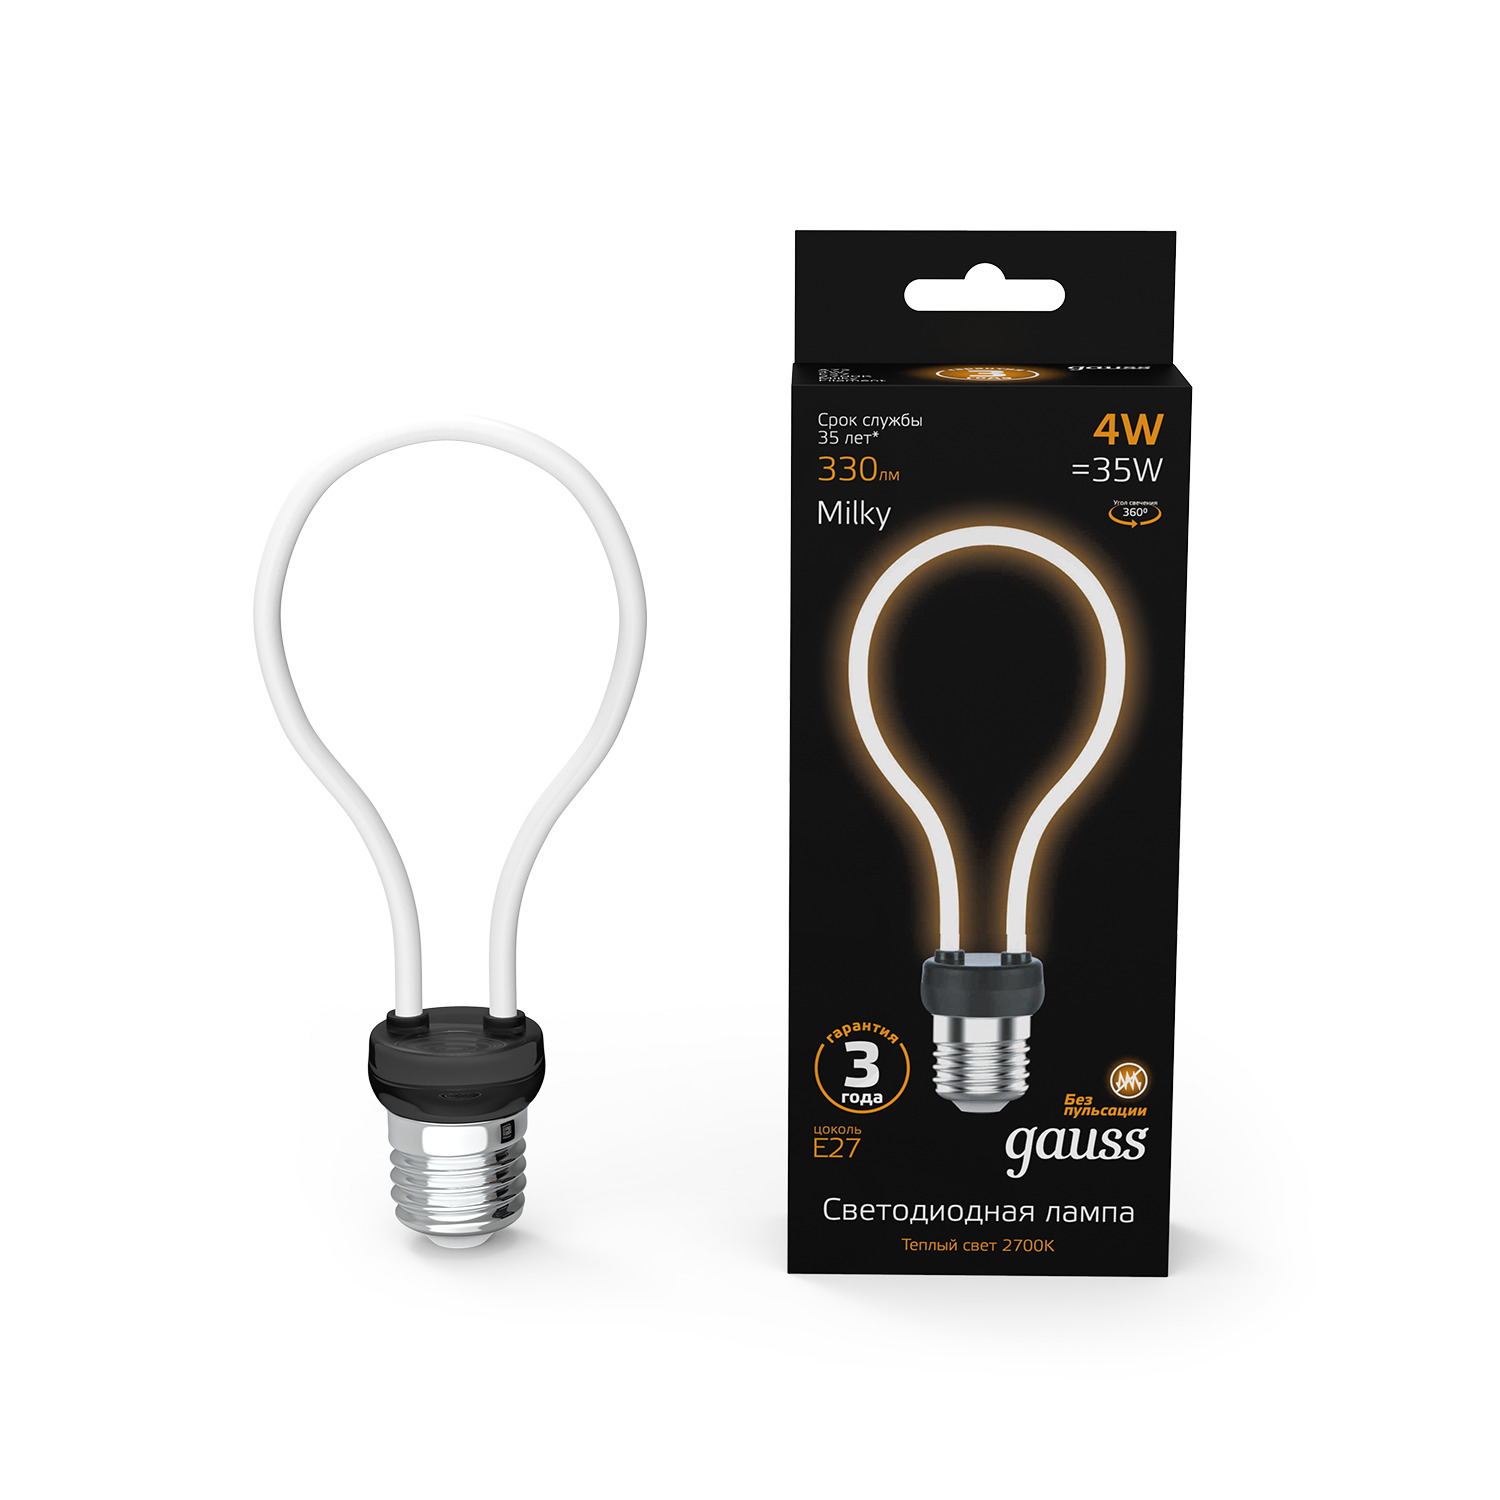 цена Лампа Gauss LED Filament Bulbless A72 Milky E27 4W 330 Лм 2700K 72x160мм